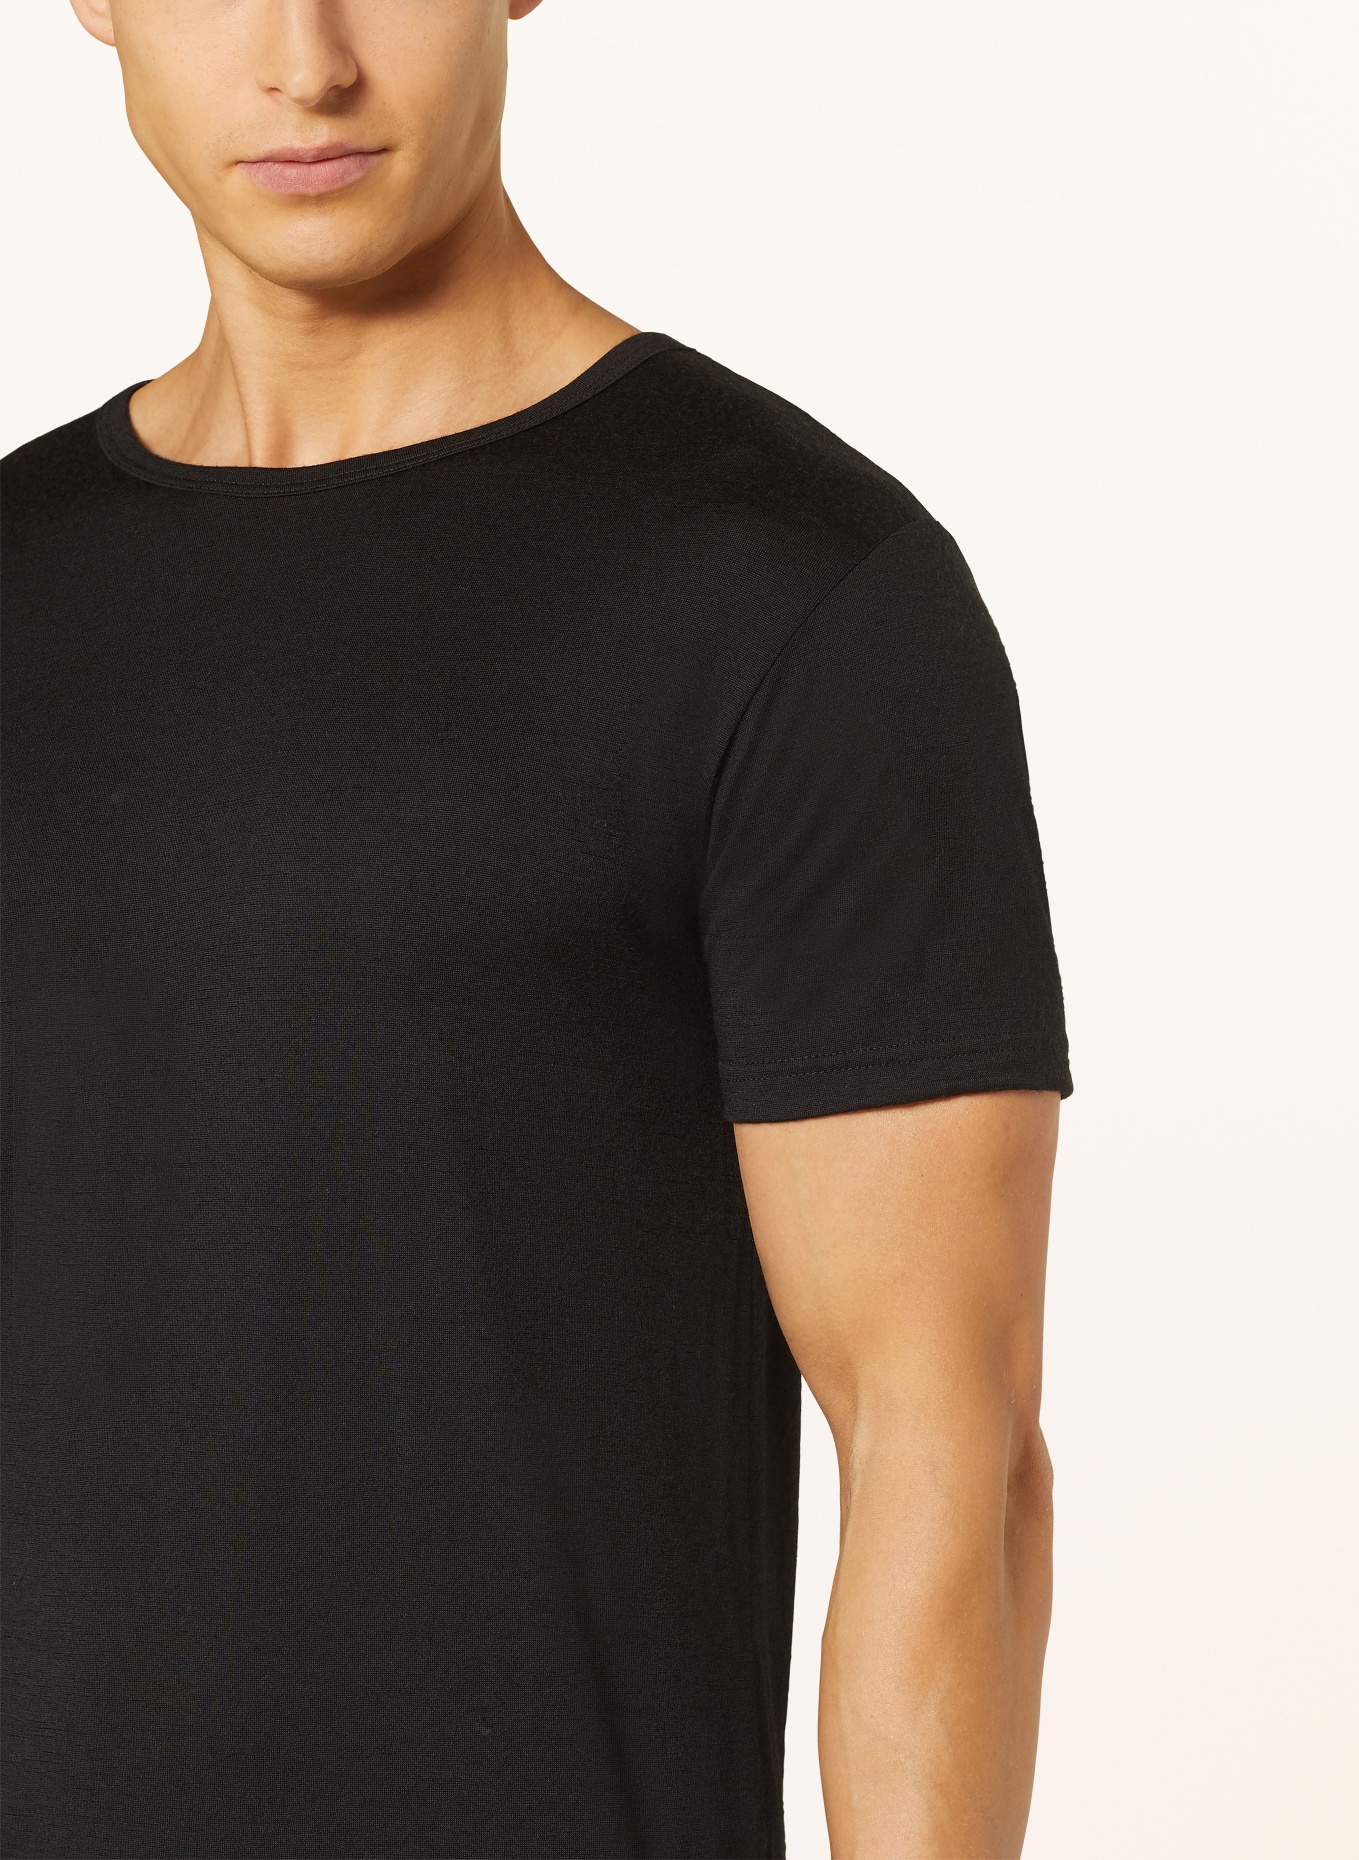 DEVOLD Functional underwear shirt JAKTA MERINO 200 made of merino wool, Color: BLACK (Image 4)